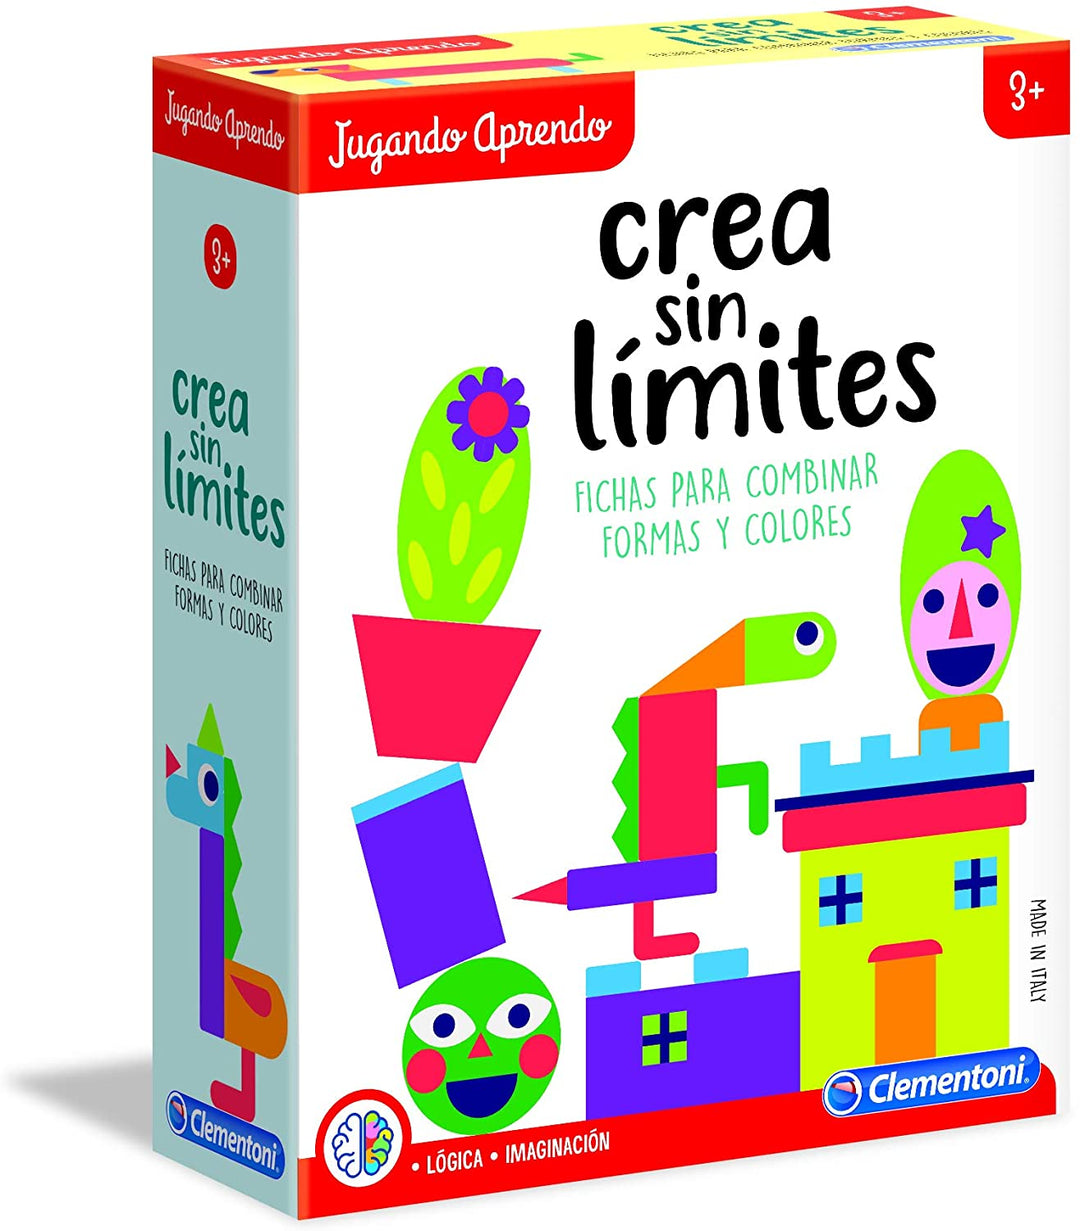 Clementoni 55312 Crea sin Lmites Educational Game, Multicoloured